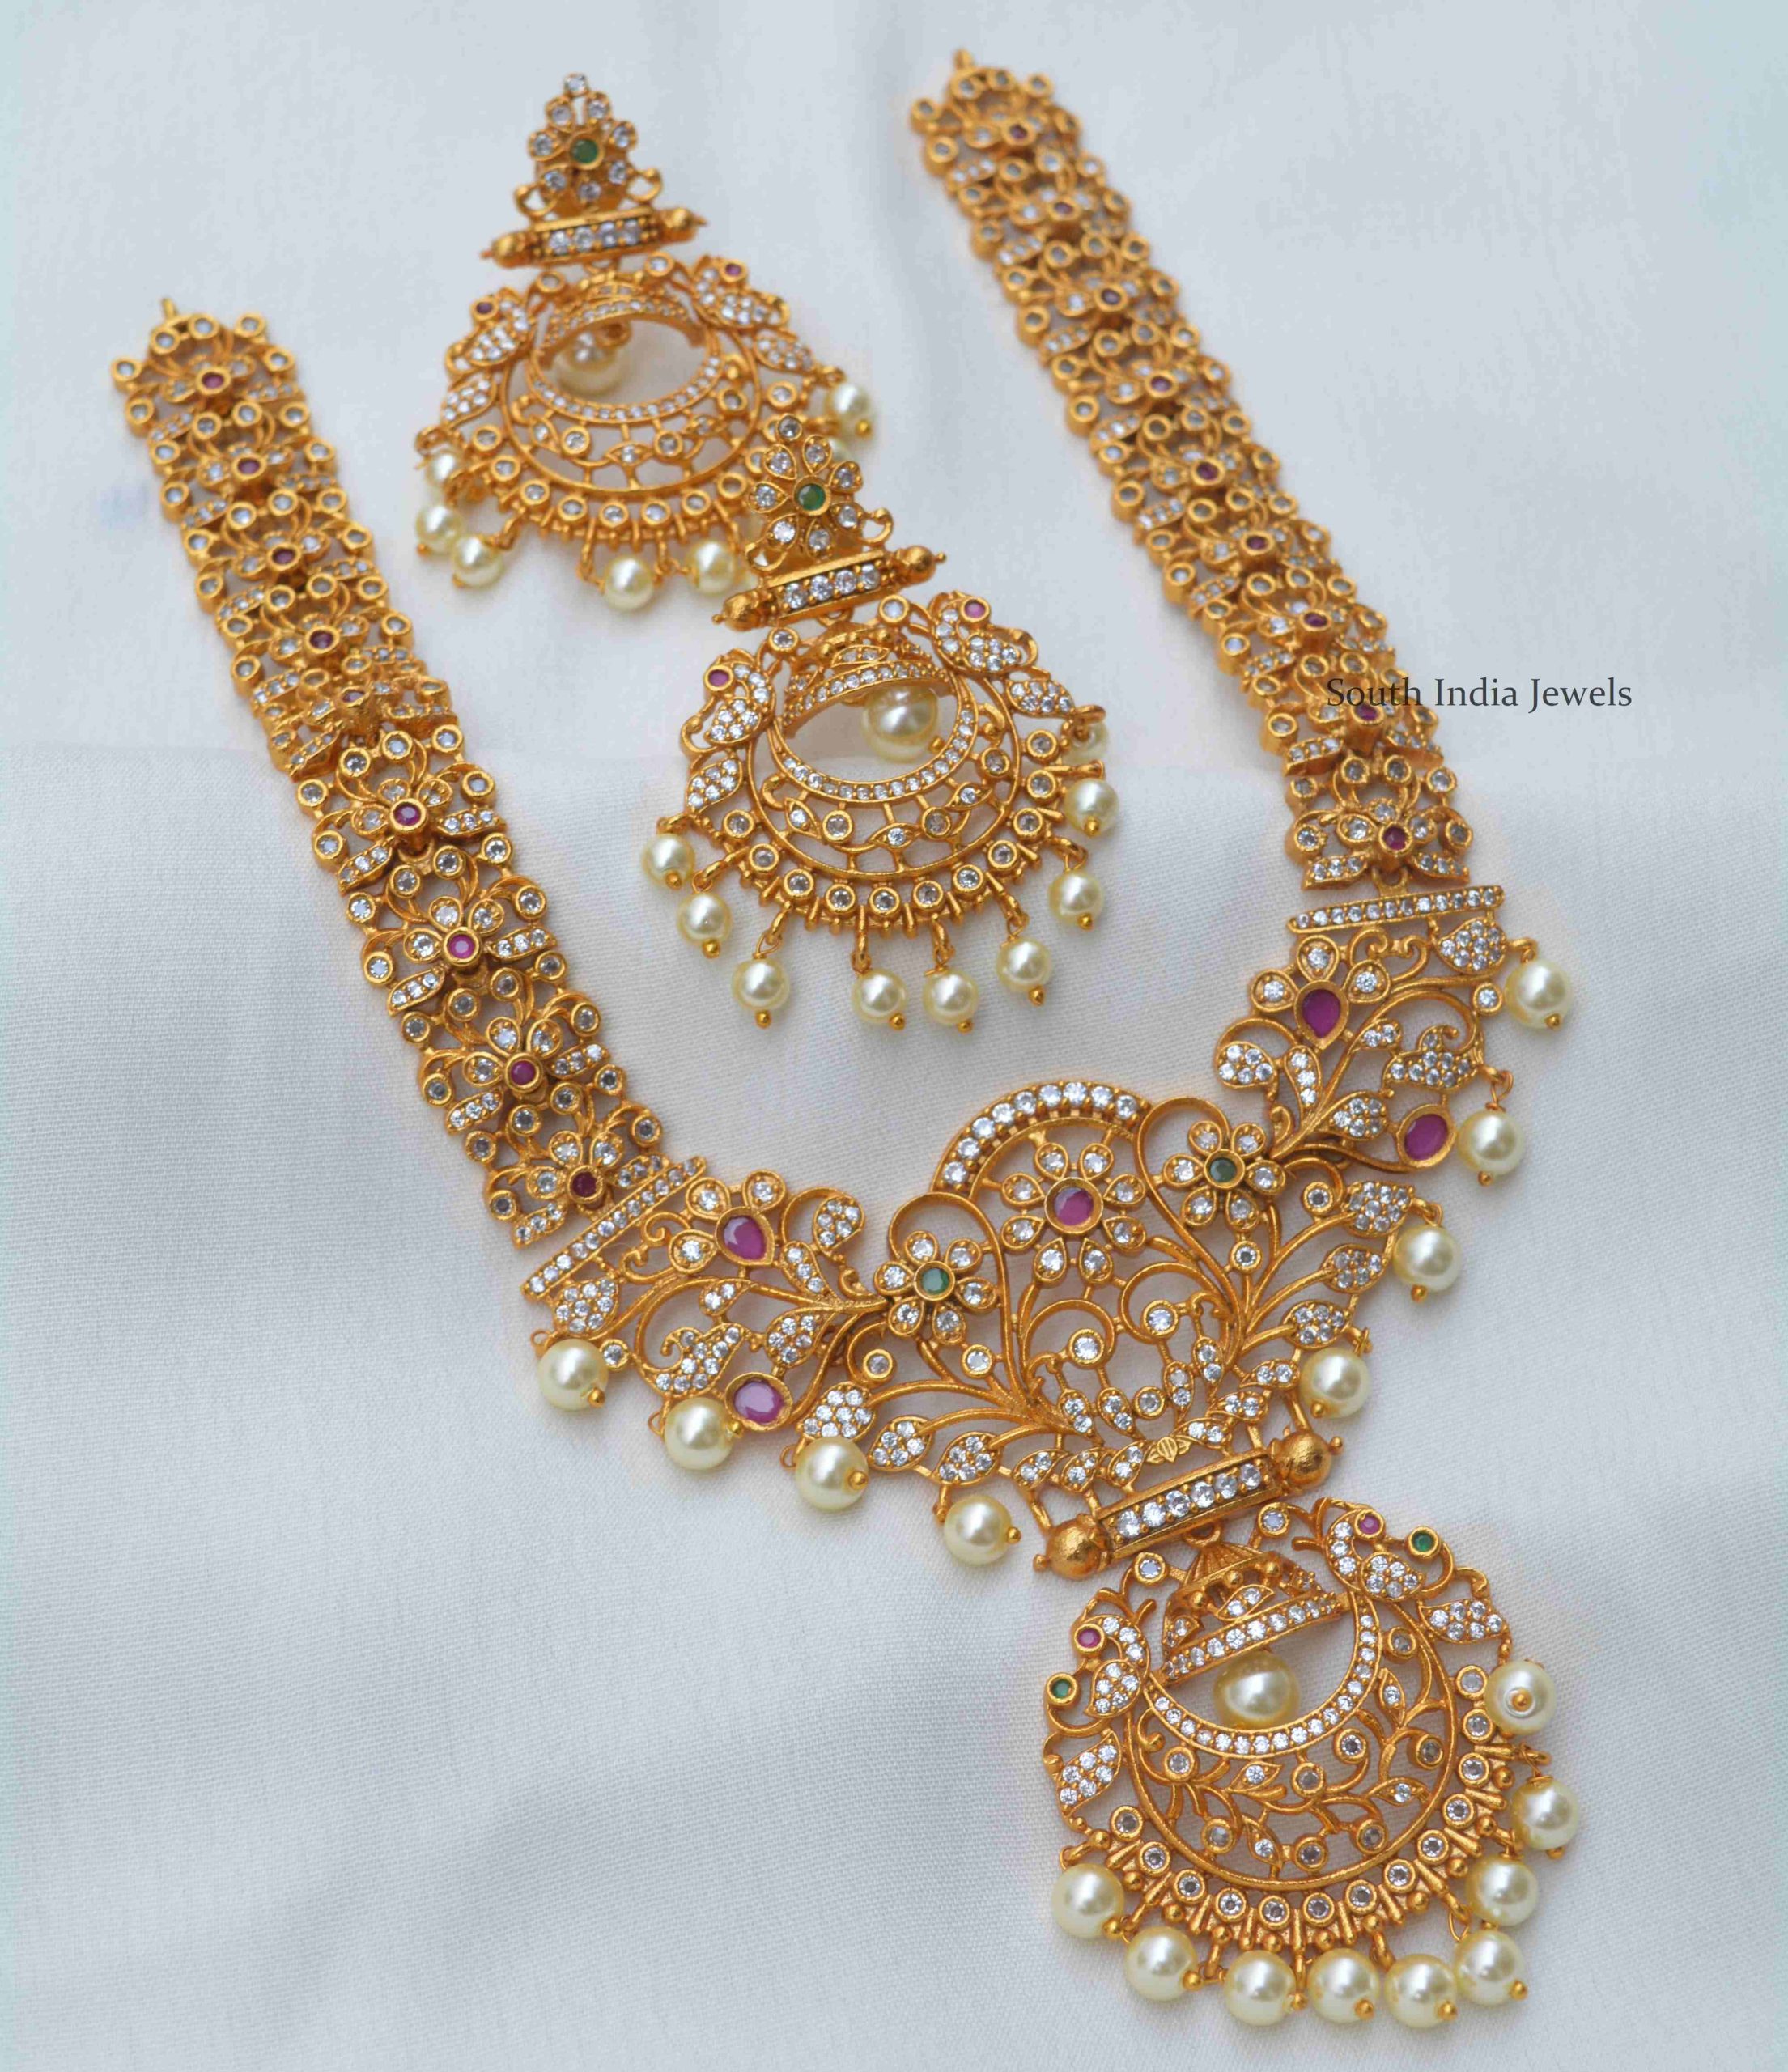 Grand Bridal Imitation Necklace Set